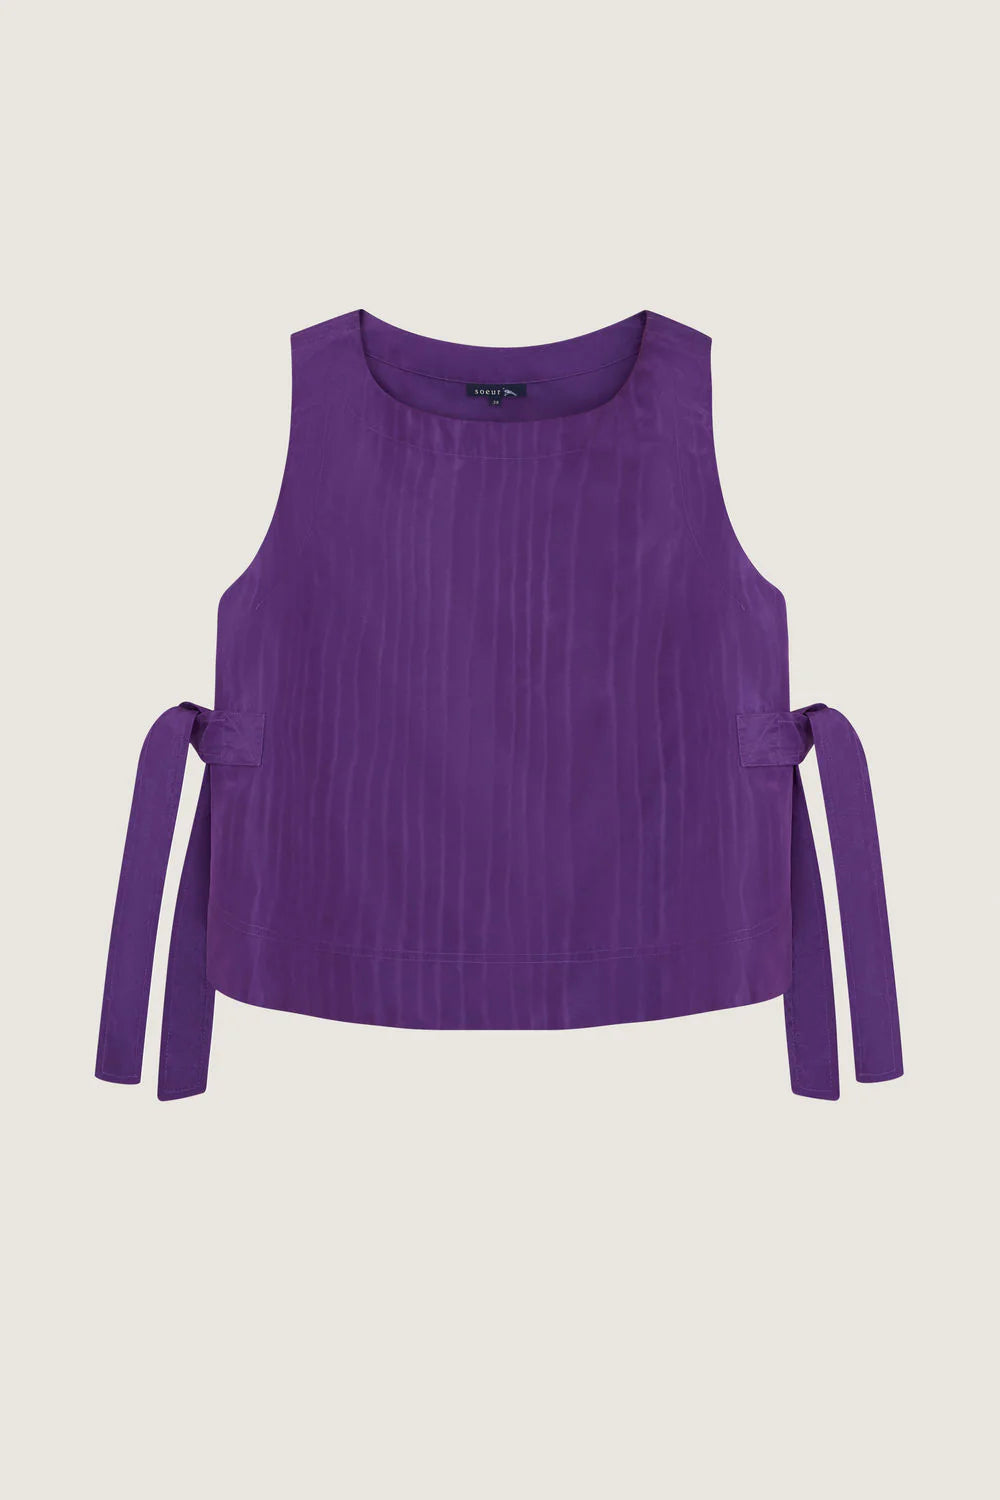 Soeur - Tishka Shirt: Purple